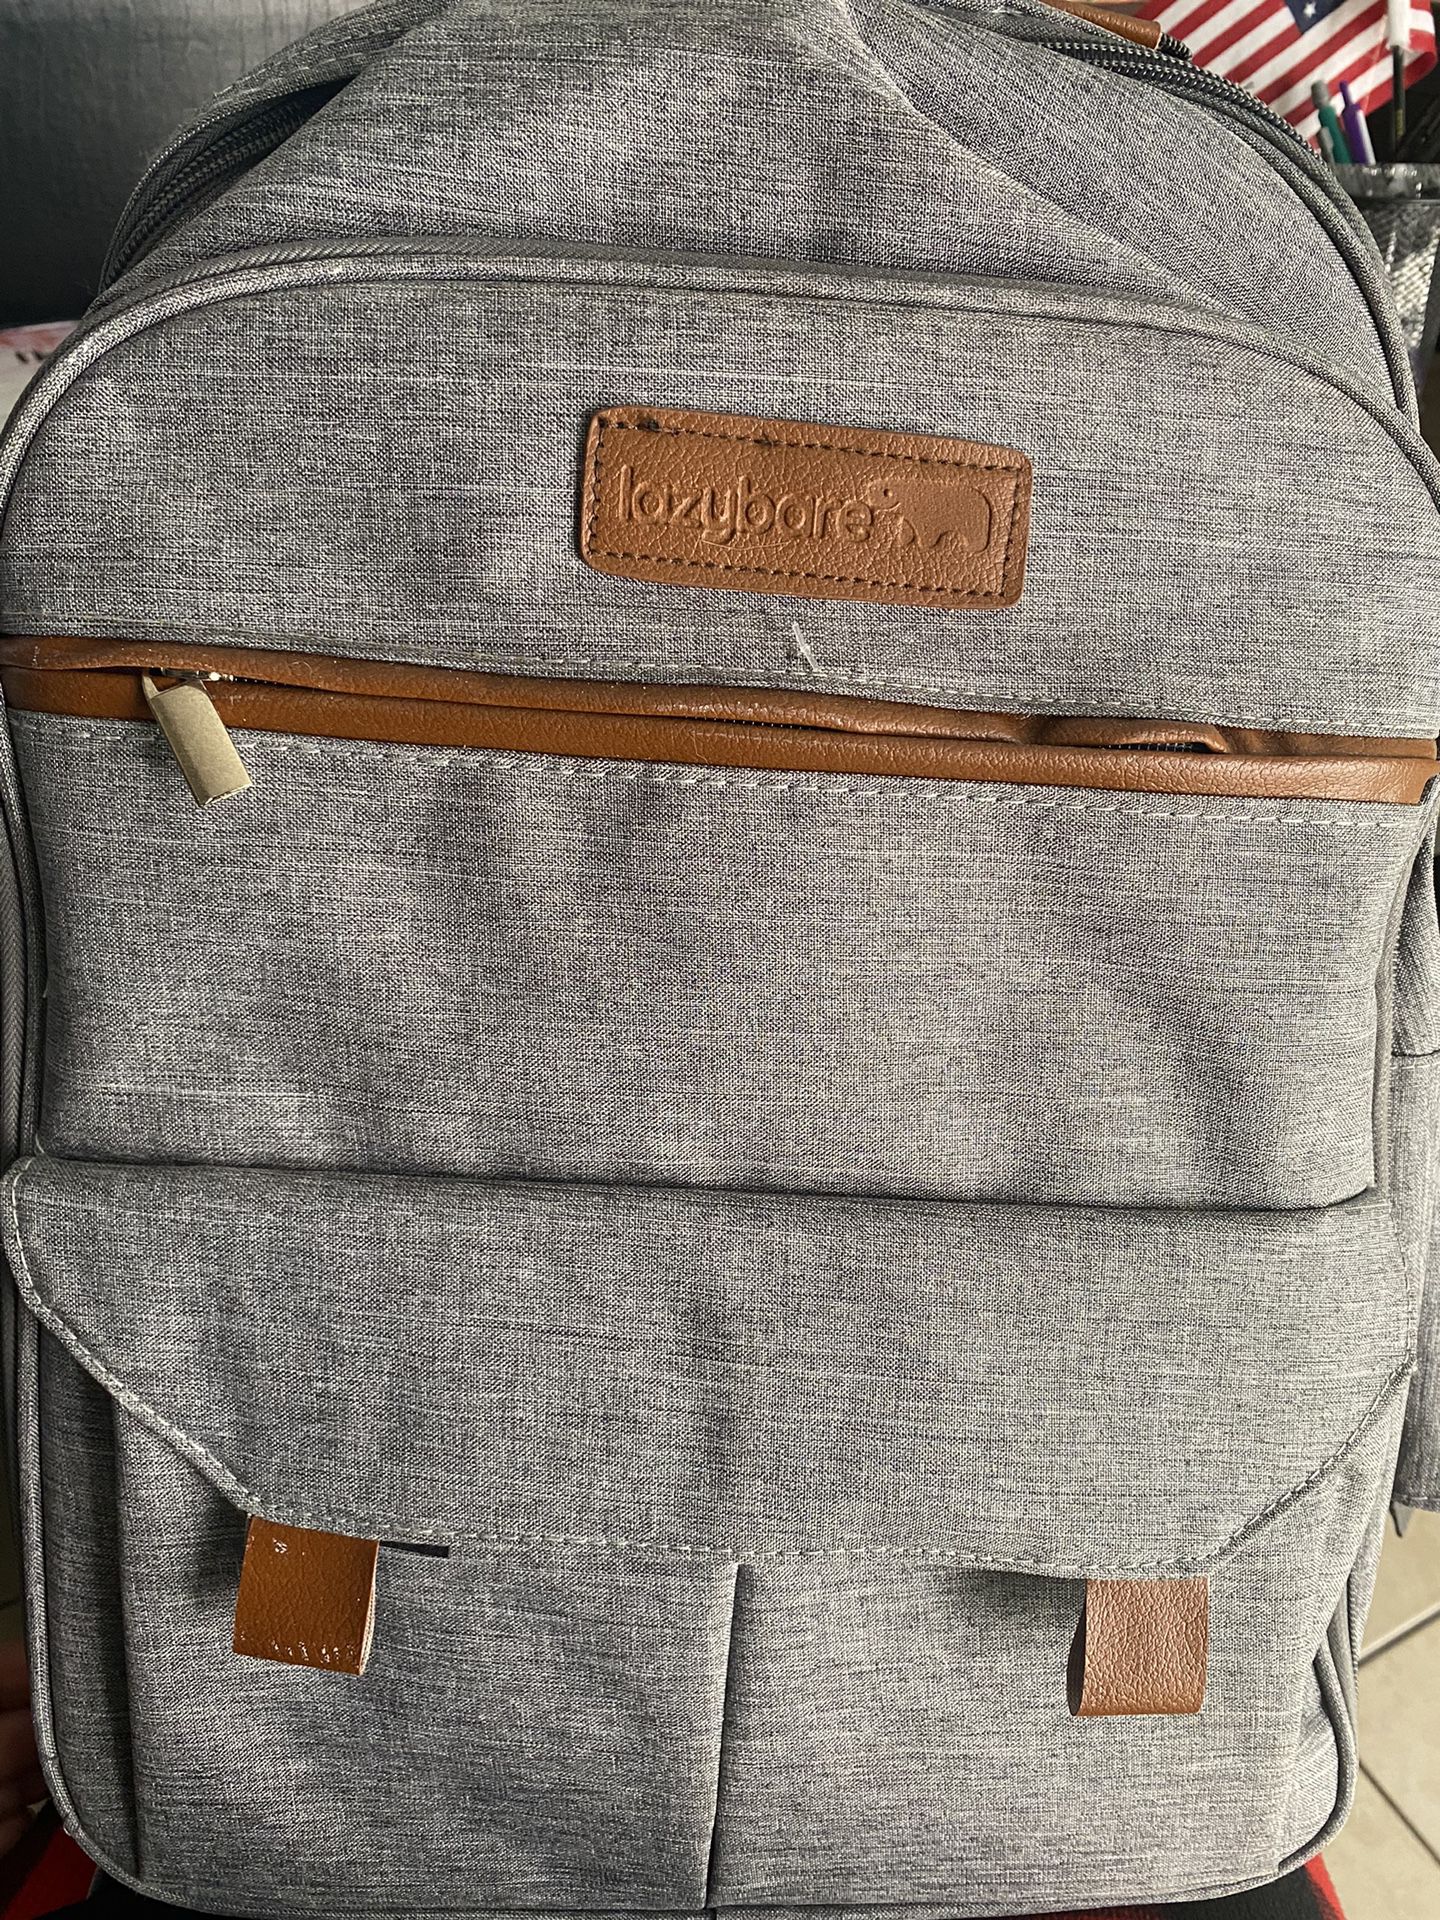 Picnic In A Bag 